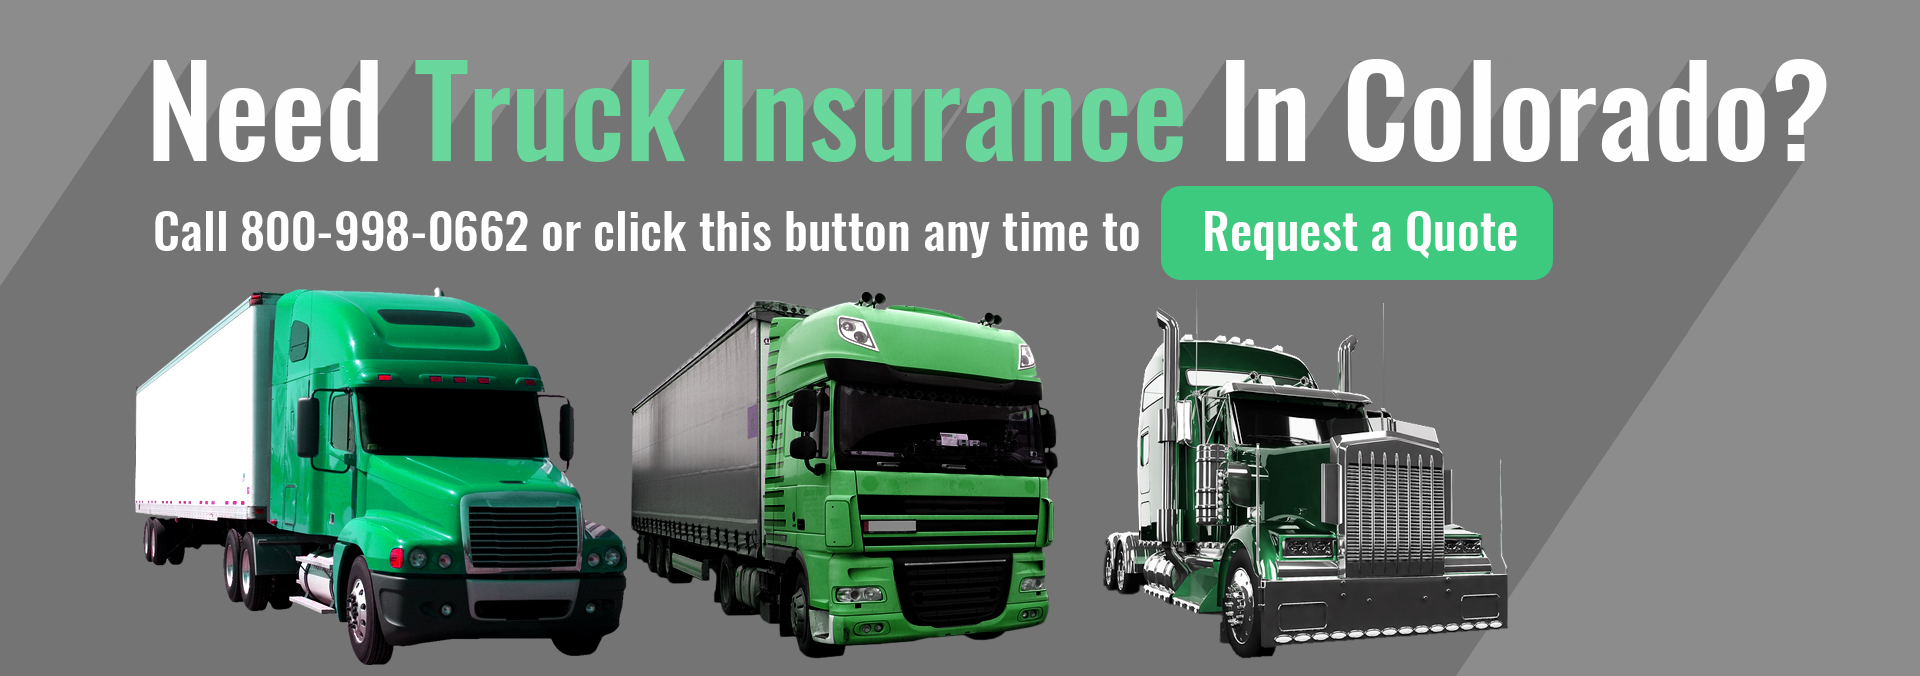 Truck Insurance in Colorado